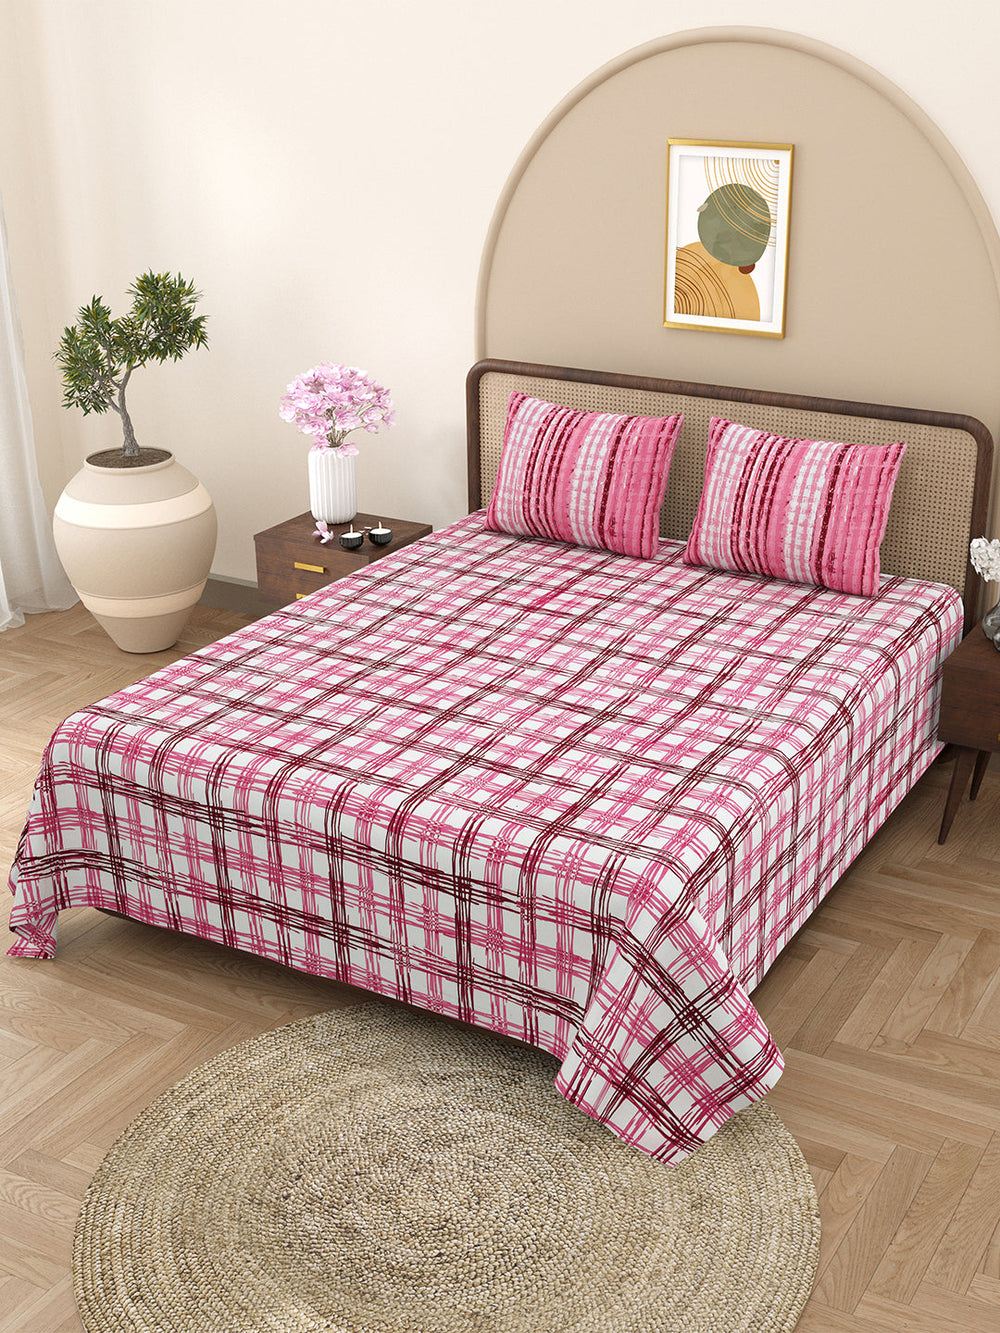 Bella Casa Fashion & Retail Ltd BEDSHEET 88 X 96 Inch / Pink / Cotton Double Bedsheet with 2 Pillow Covers Cotton Geometric Design Pink Colour - Element Collection